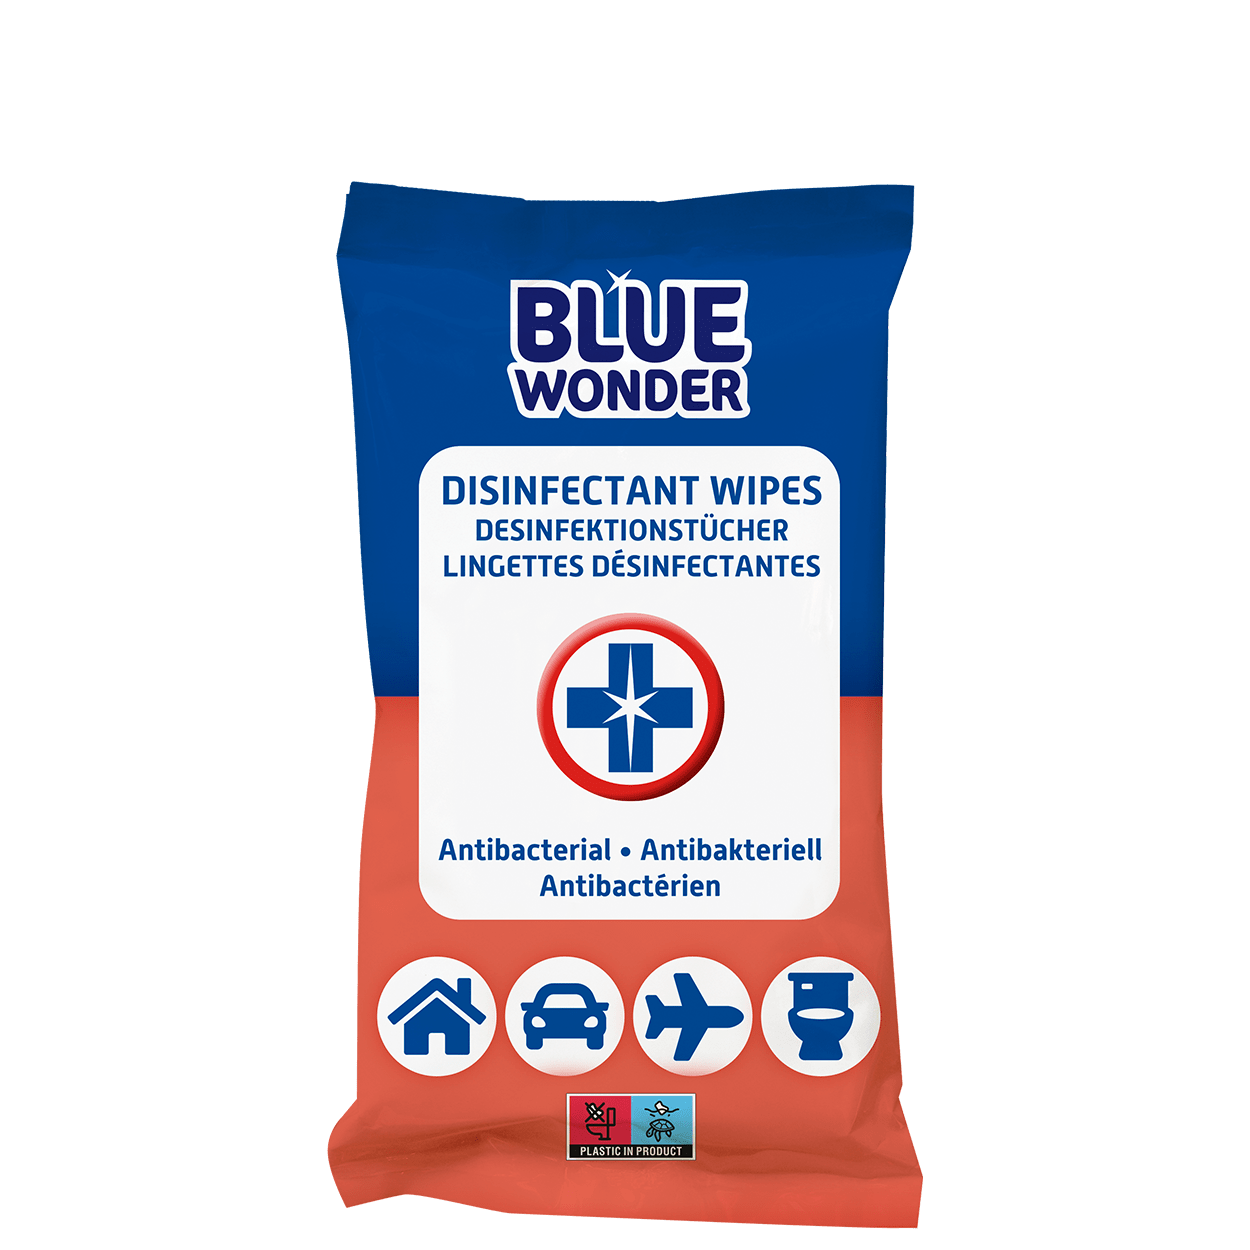 8712038002575 Blue Wonder Disinfectant wipes Desinfektionstucher Lingettes desinfectantes 20wipes front